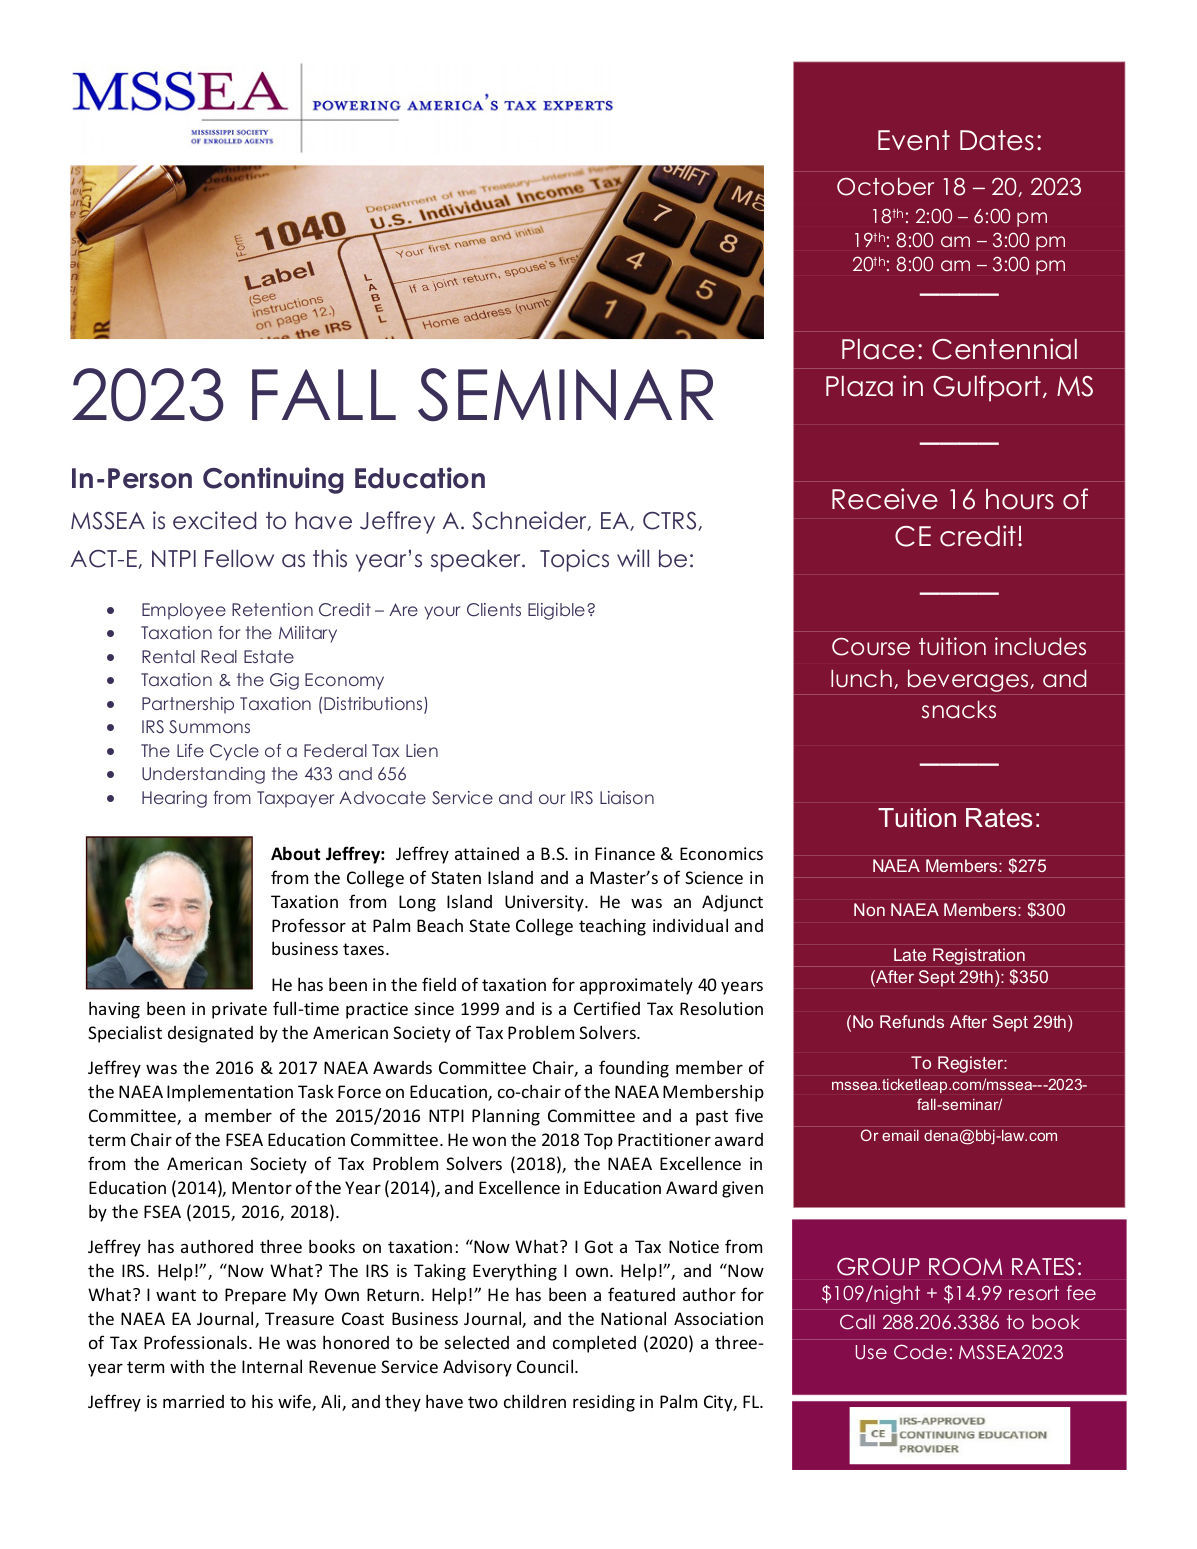 2023 Fall Seminar Flyer Screenshot